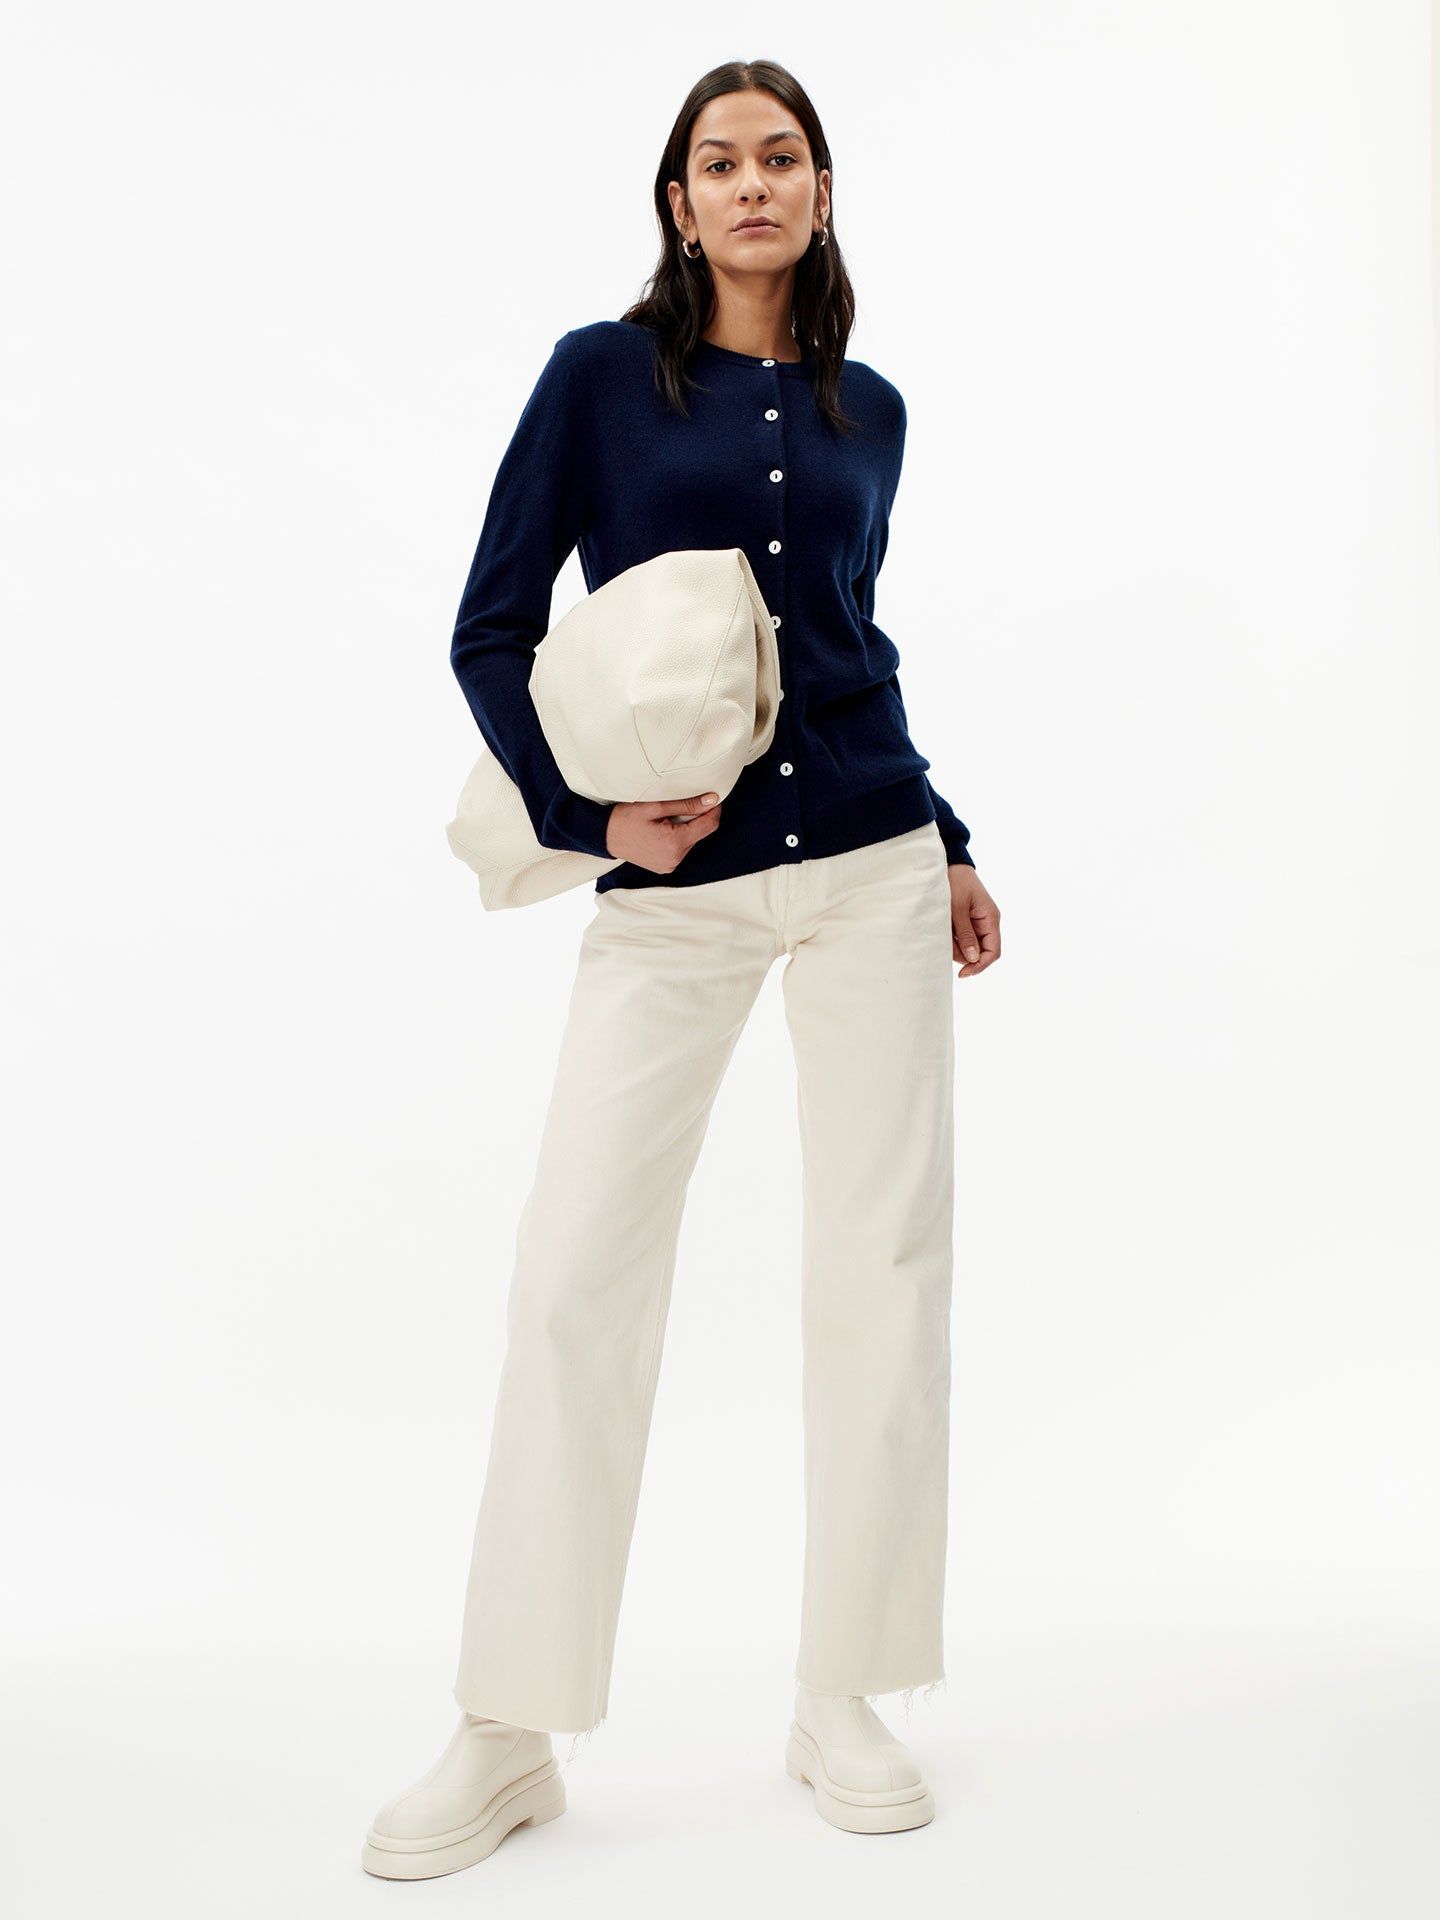 Damen Kaschmir R-Ausschnitt Strickjacke Marineblau - Gobi Cashmere